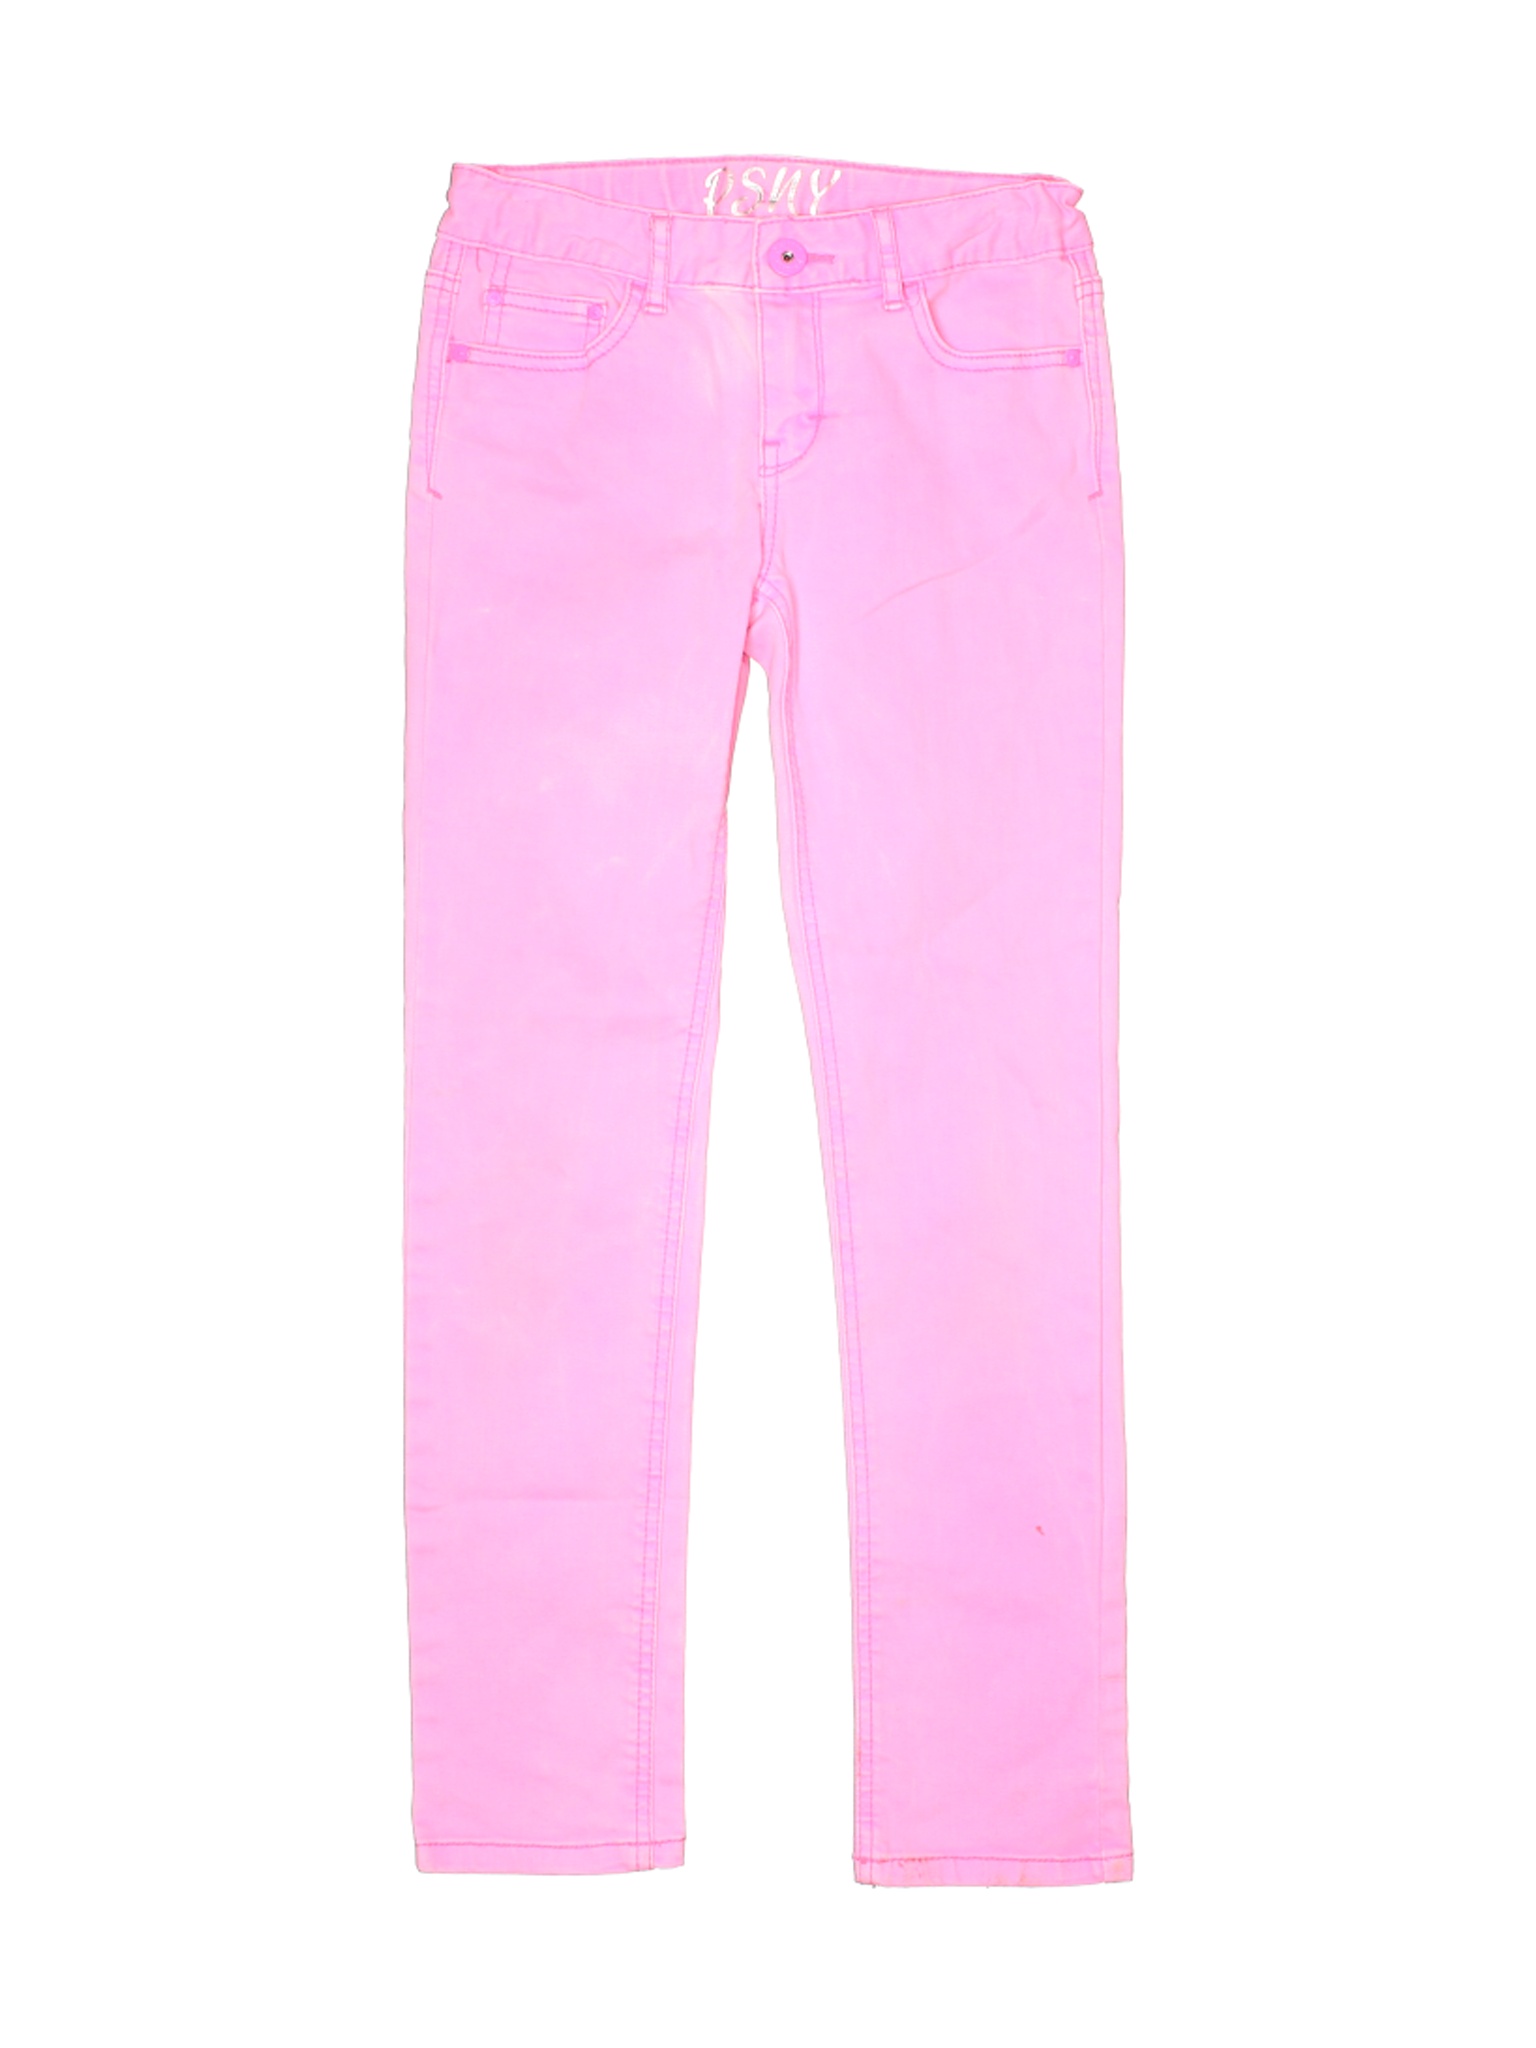 PSNY Girls Pink Jeans 10 | eBay